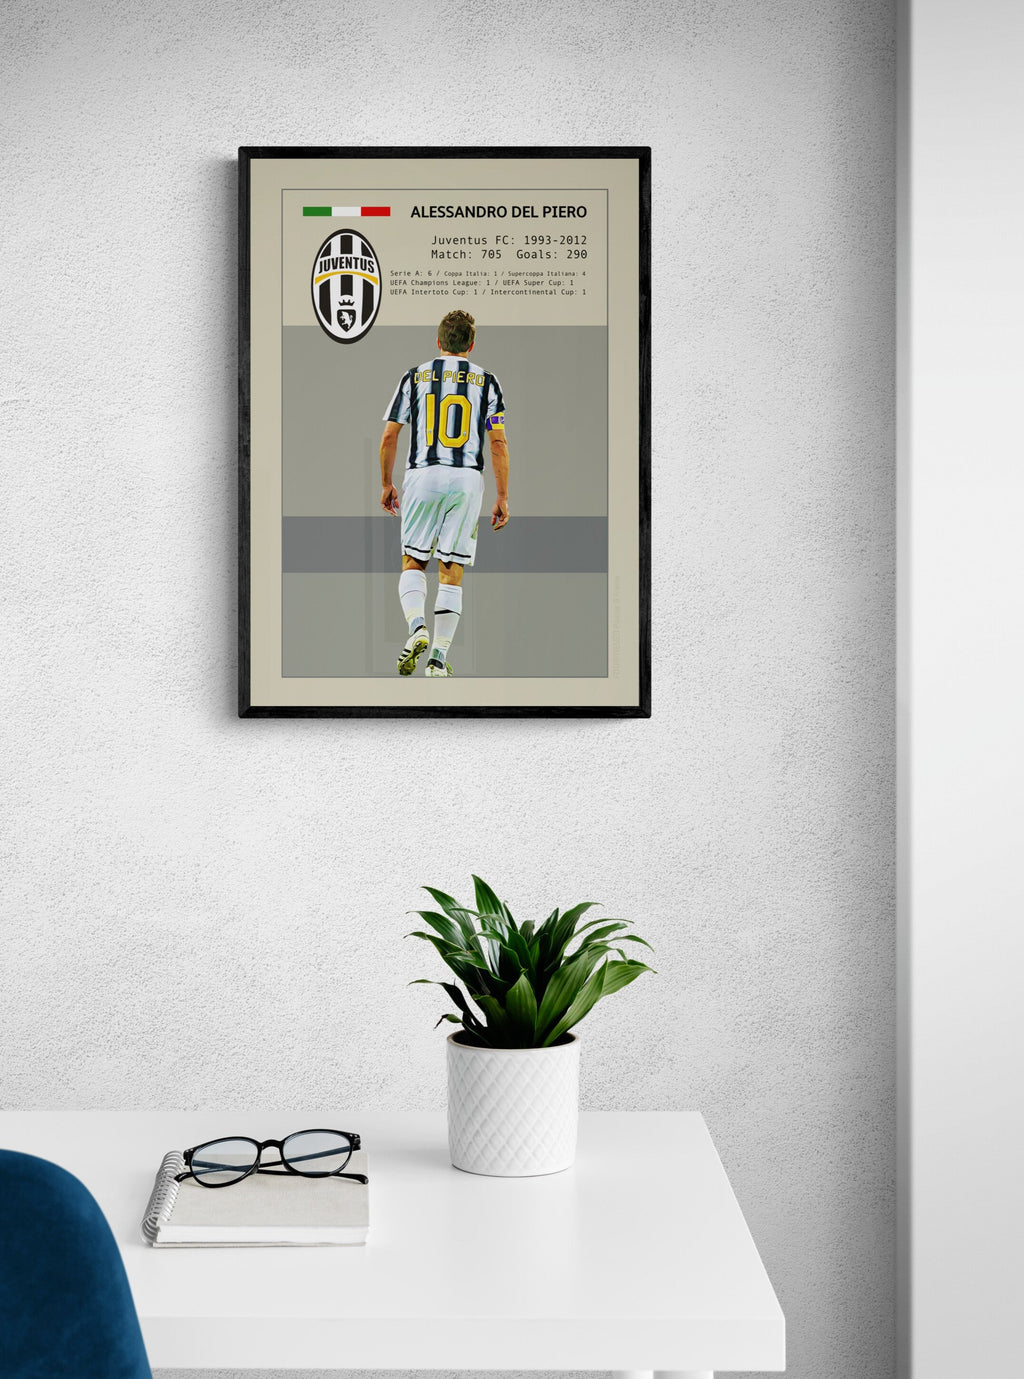 ALESSANDRO DEL PIERO Juventus FC poster